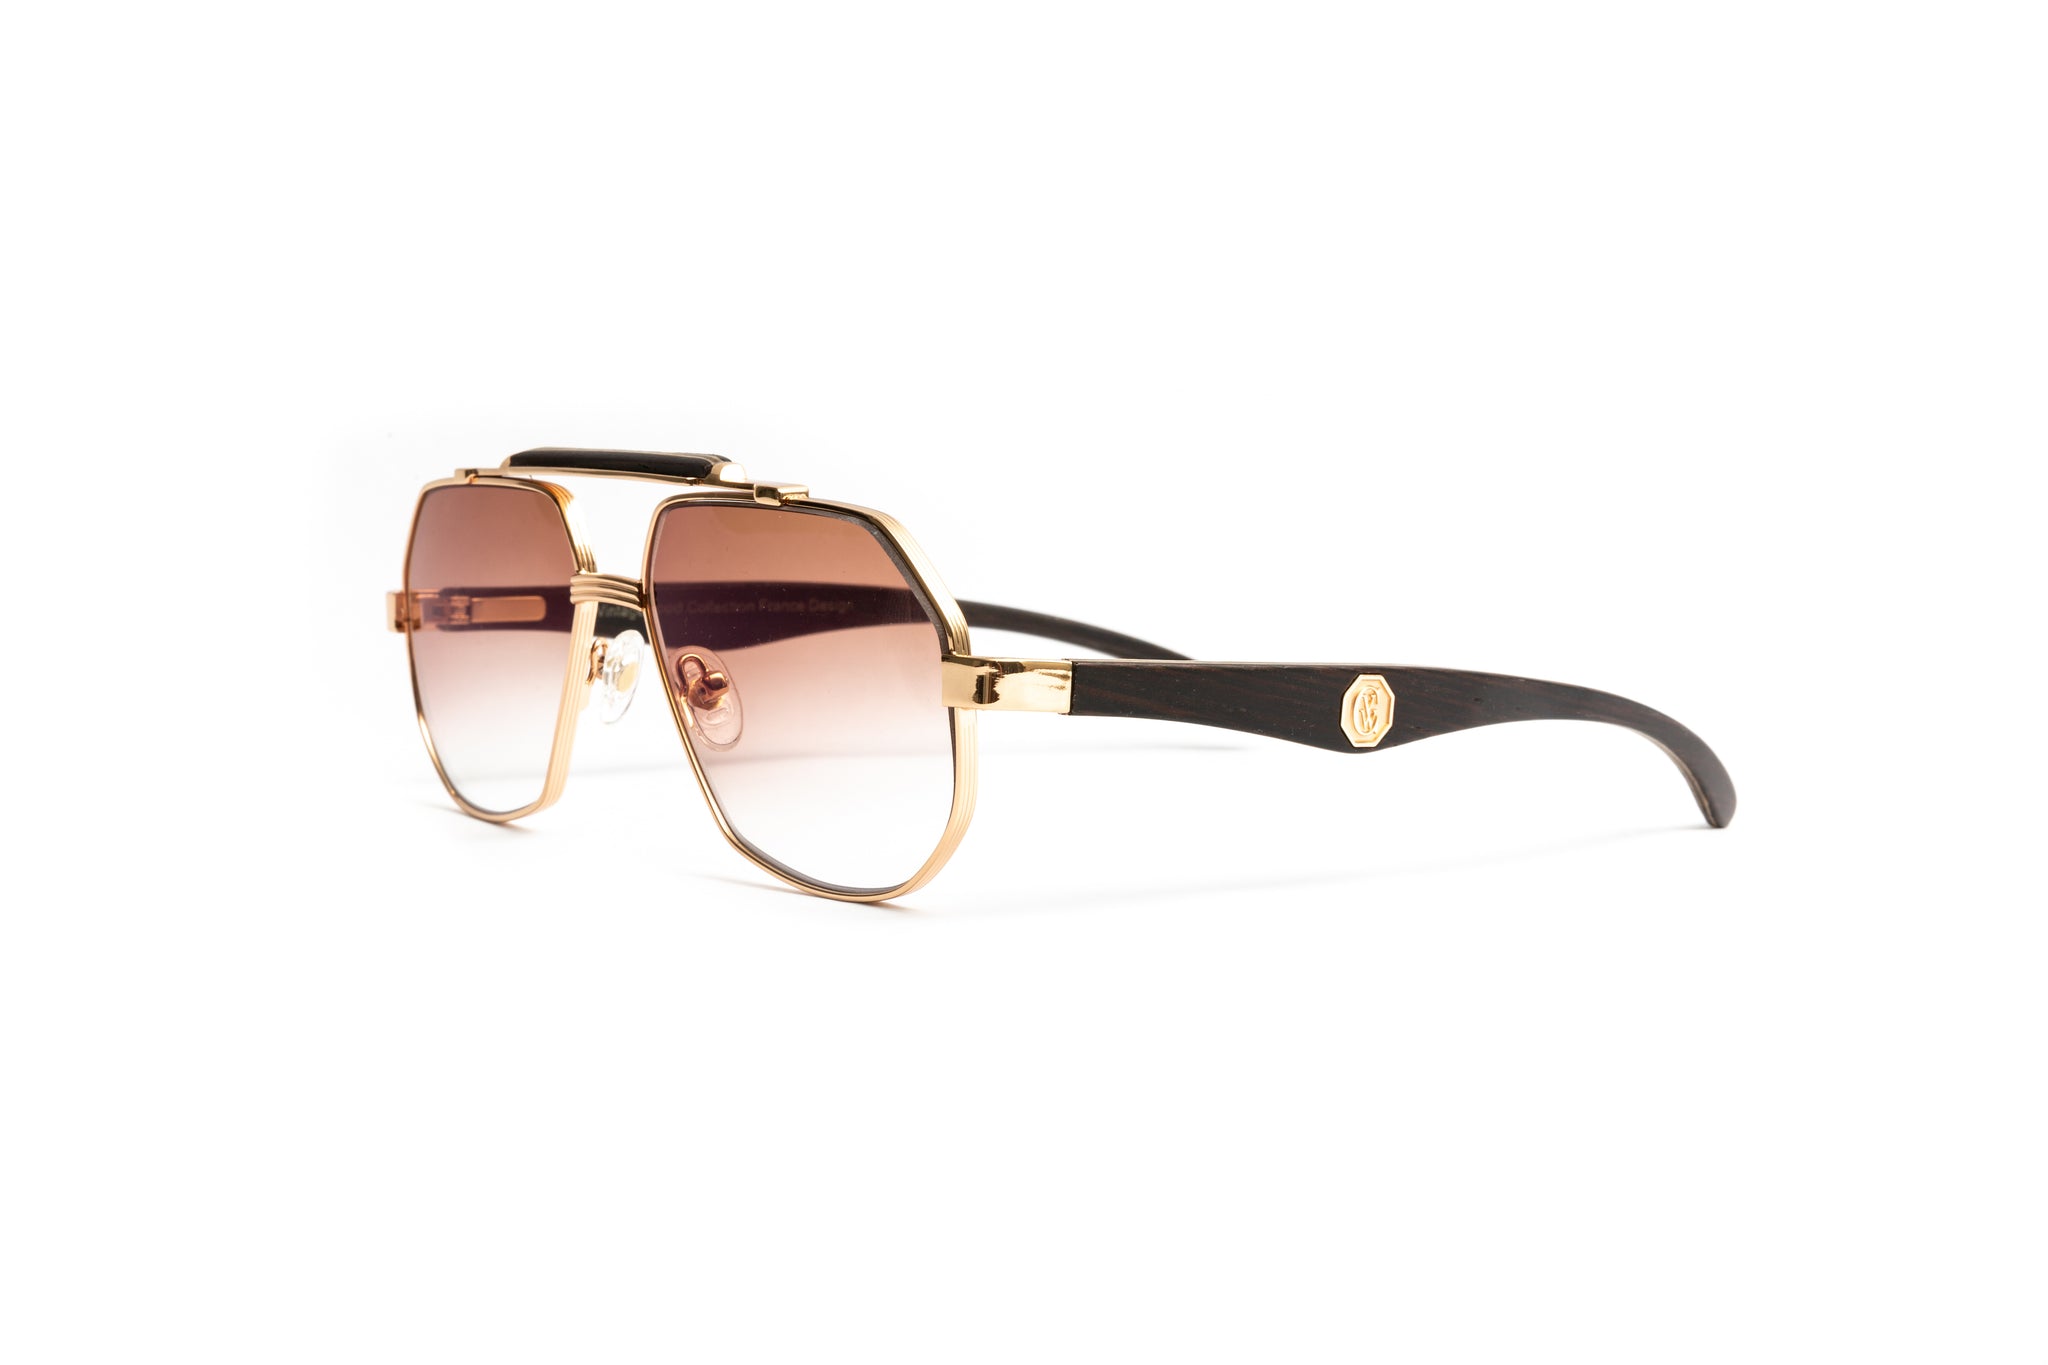 VWC Eyewear Mach #3 Sunglasses | 18kt Gold & Brown Wood Aviator Glasses